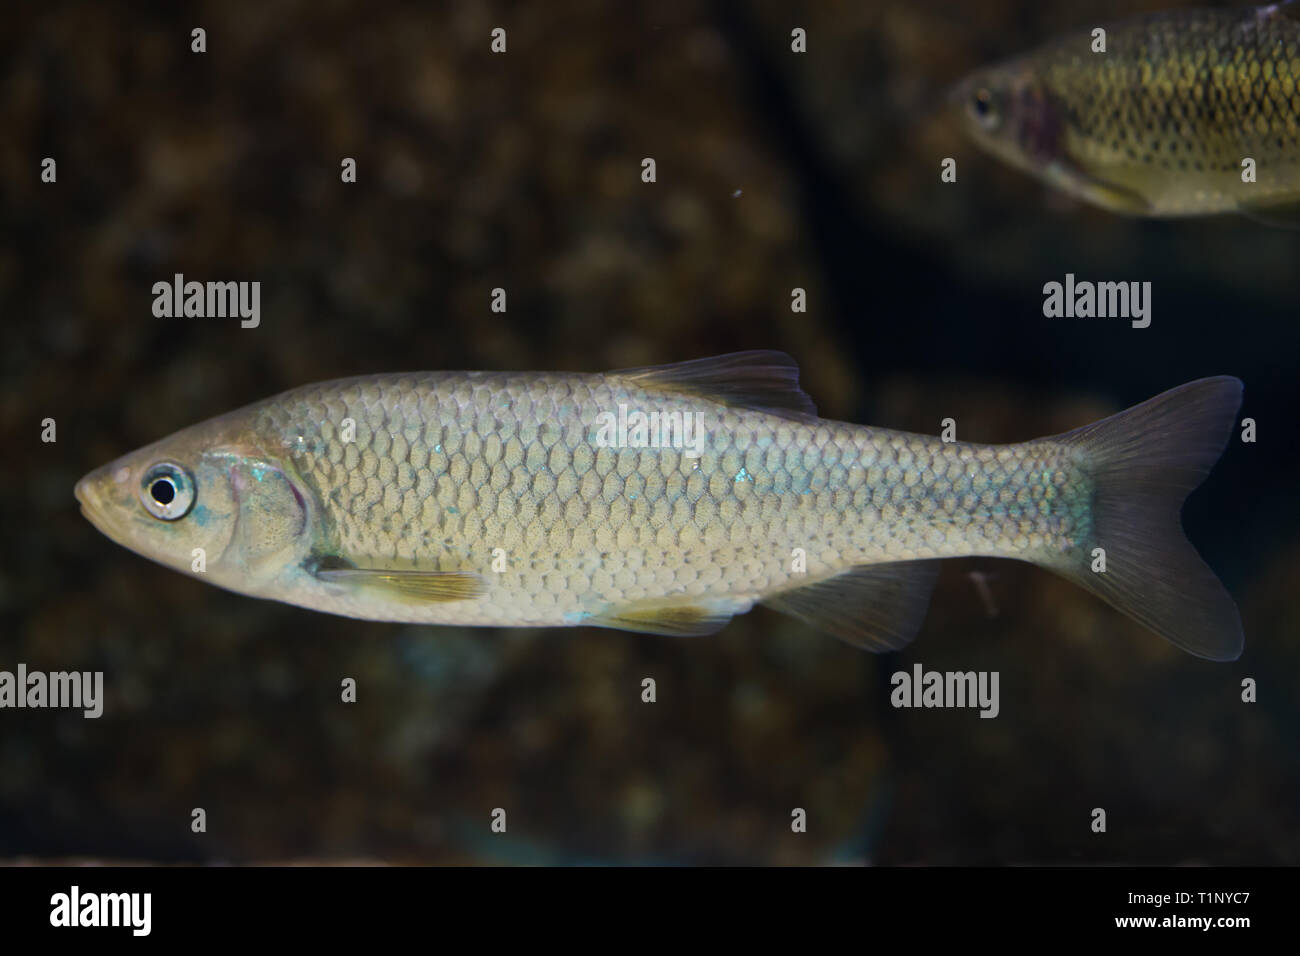 Southern Iberian chub (Squalius pyrenaicus). Freshwater fish. Stock Photo